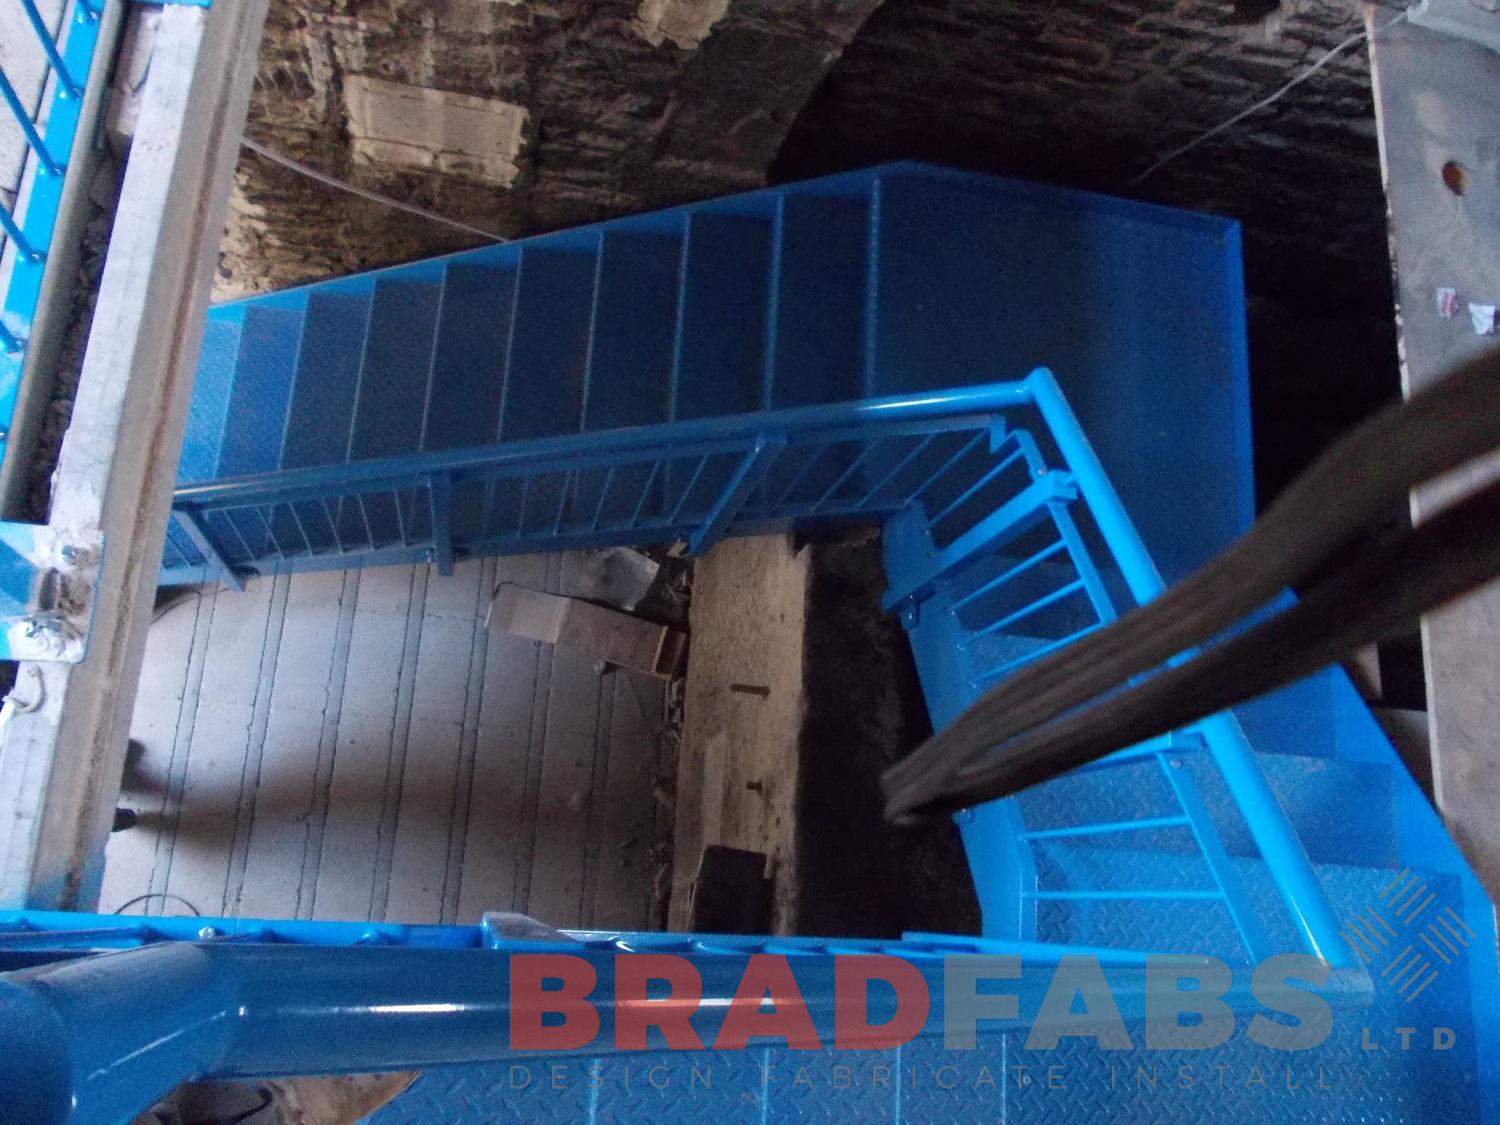 Bradfabs, mild steel internal staircase, powder coated, durbar treads, bespoke staircase 